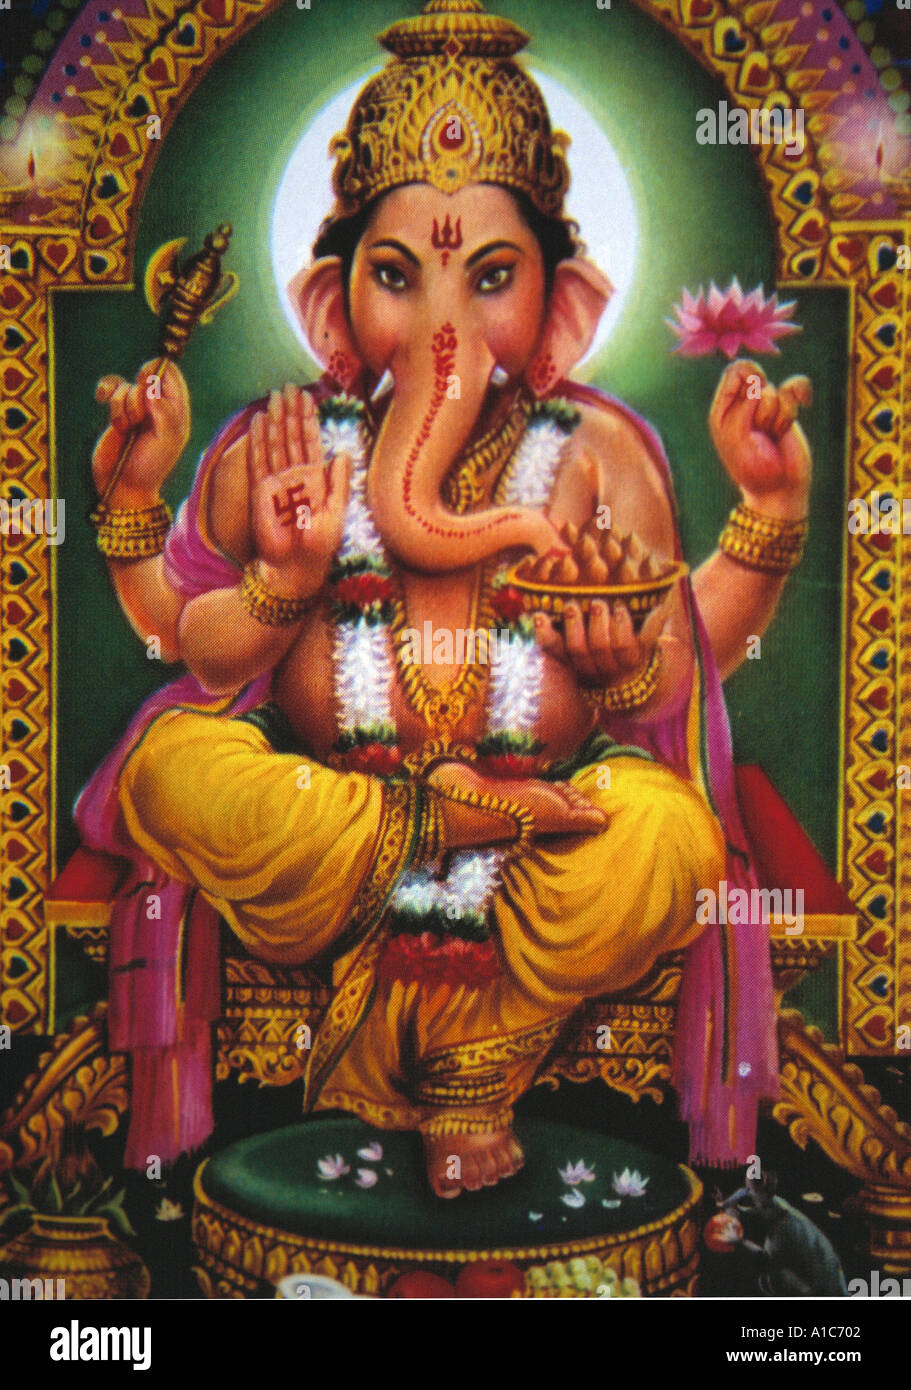 ganesh-the-god-with-the-elephant-head-widely-worshipped-in-hindu-mythology-A1C702.jpg